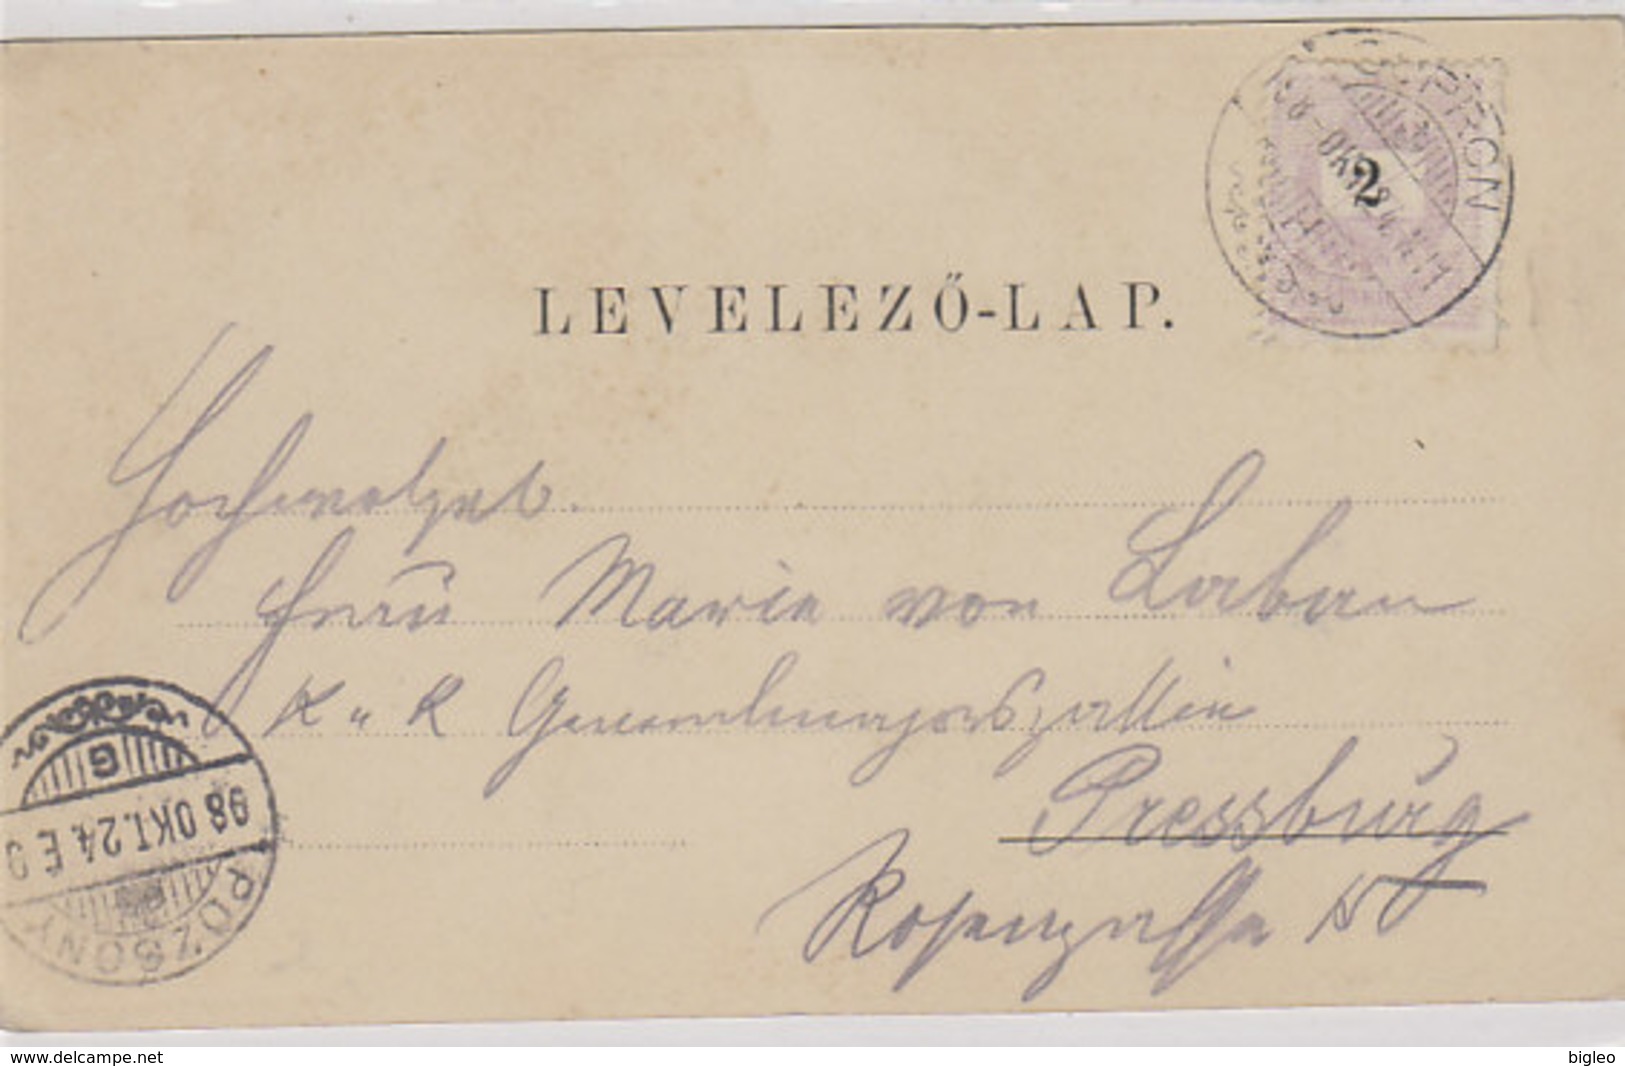 Oedenburg - Kohlebergwerk Brennberg - 1924        (A-91-100915) - Ungarn